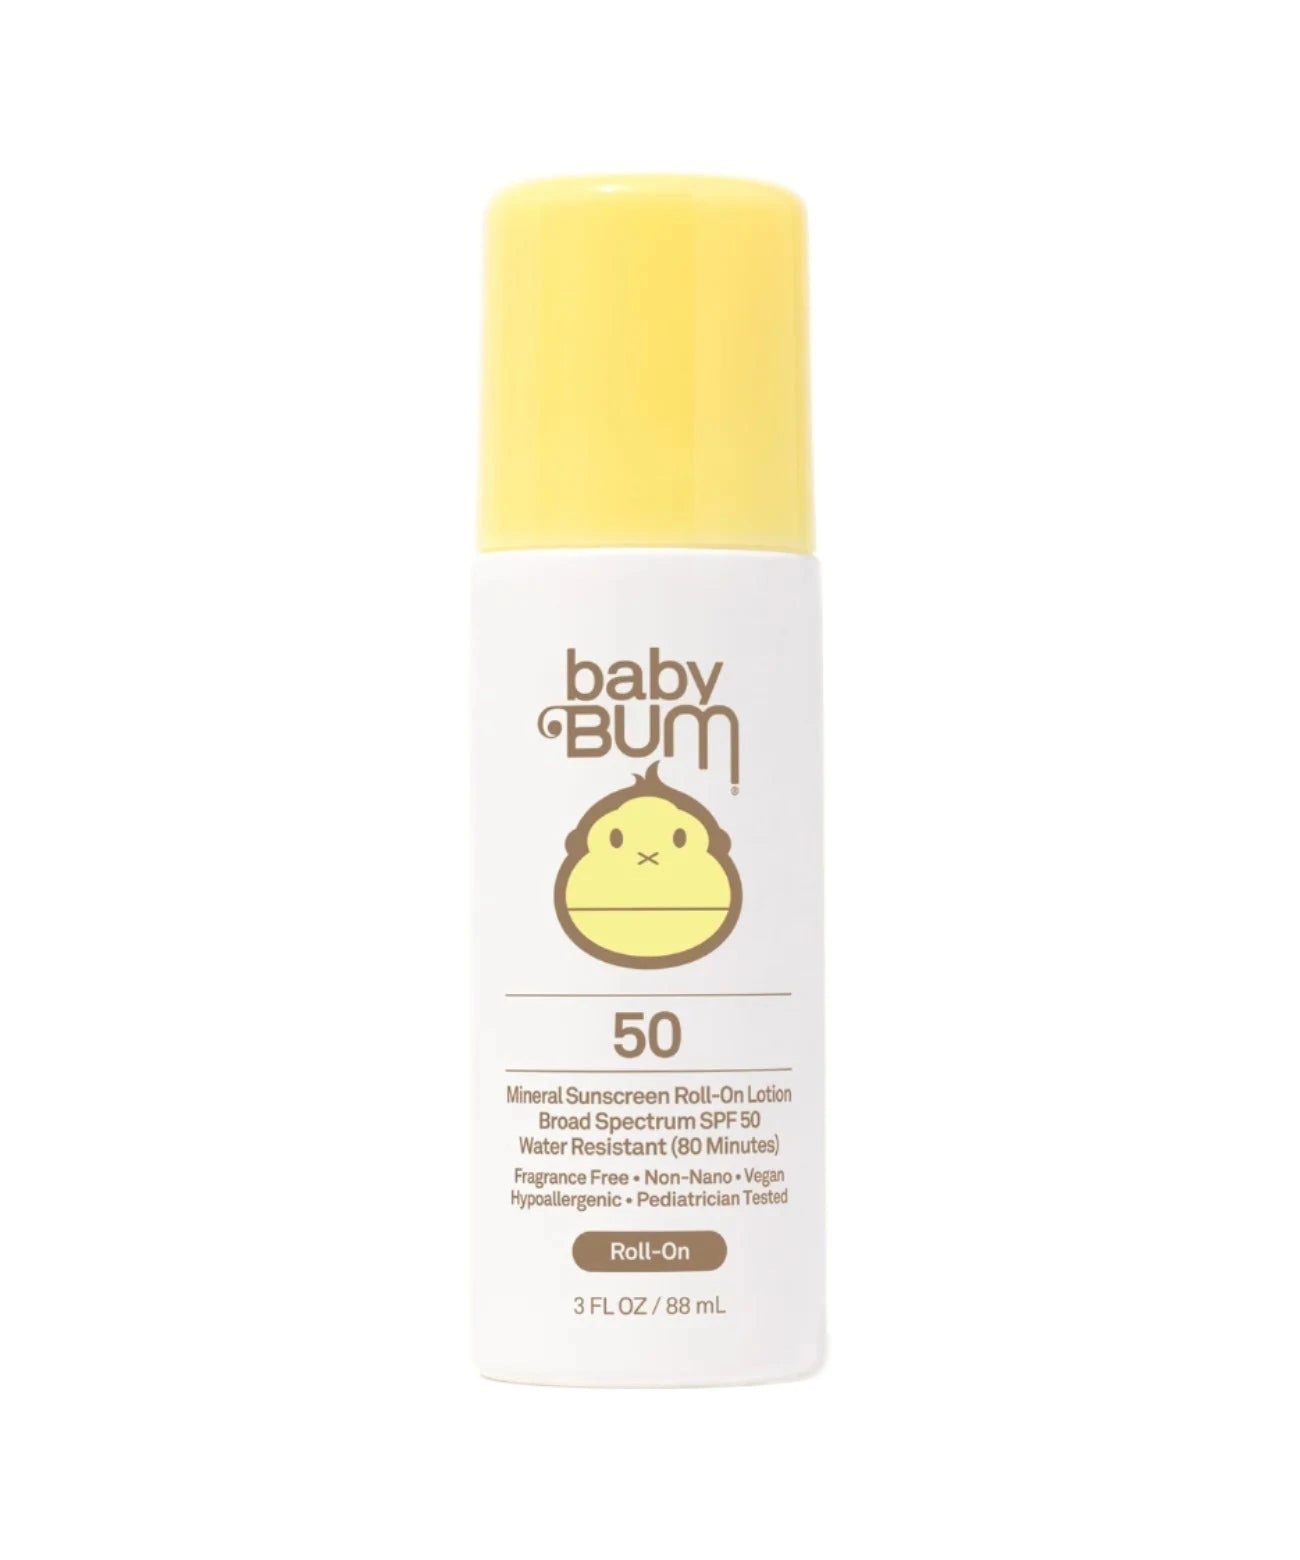 SUN BUM Baby Bum Mineral SPF 50 Roll-On Sunscreen Sunscreen Sun Bum 